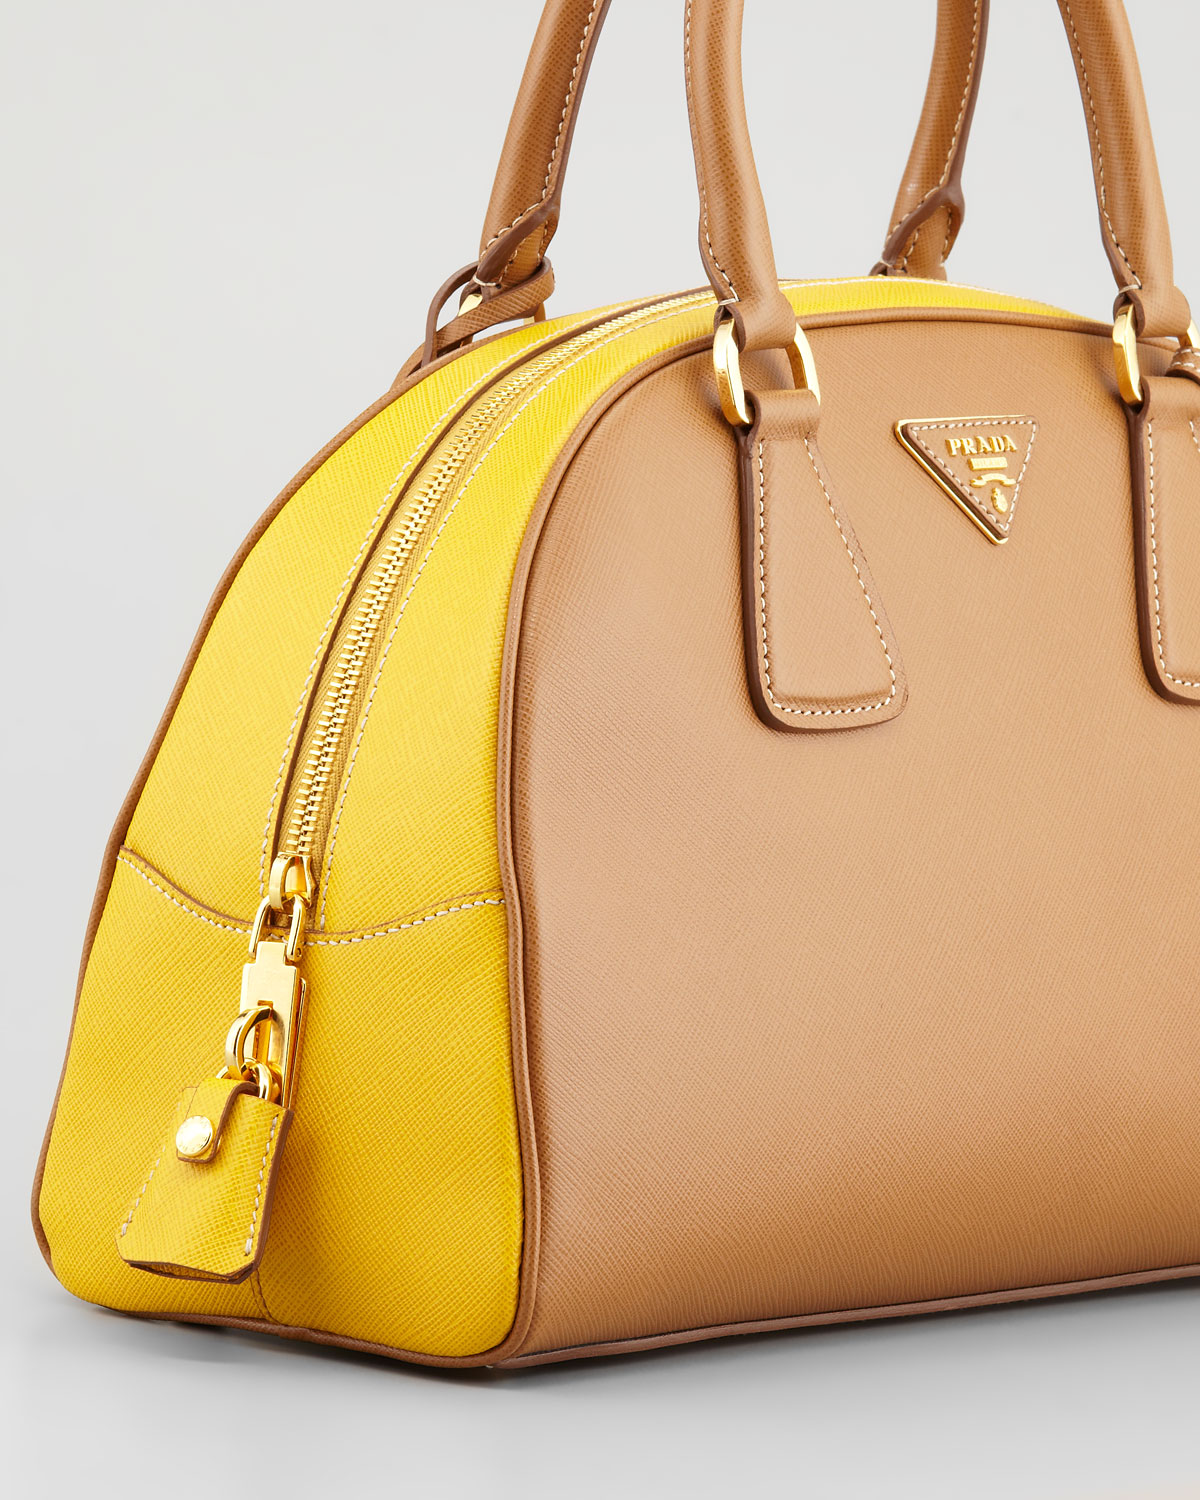 Prada Saffiano Lux Bicolor Bowler Bag in Yellow (multi colors) | Lyst  